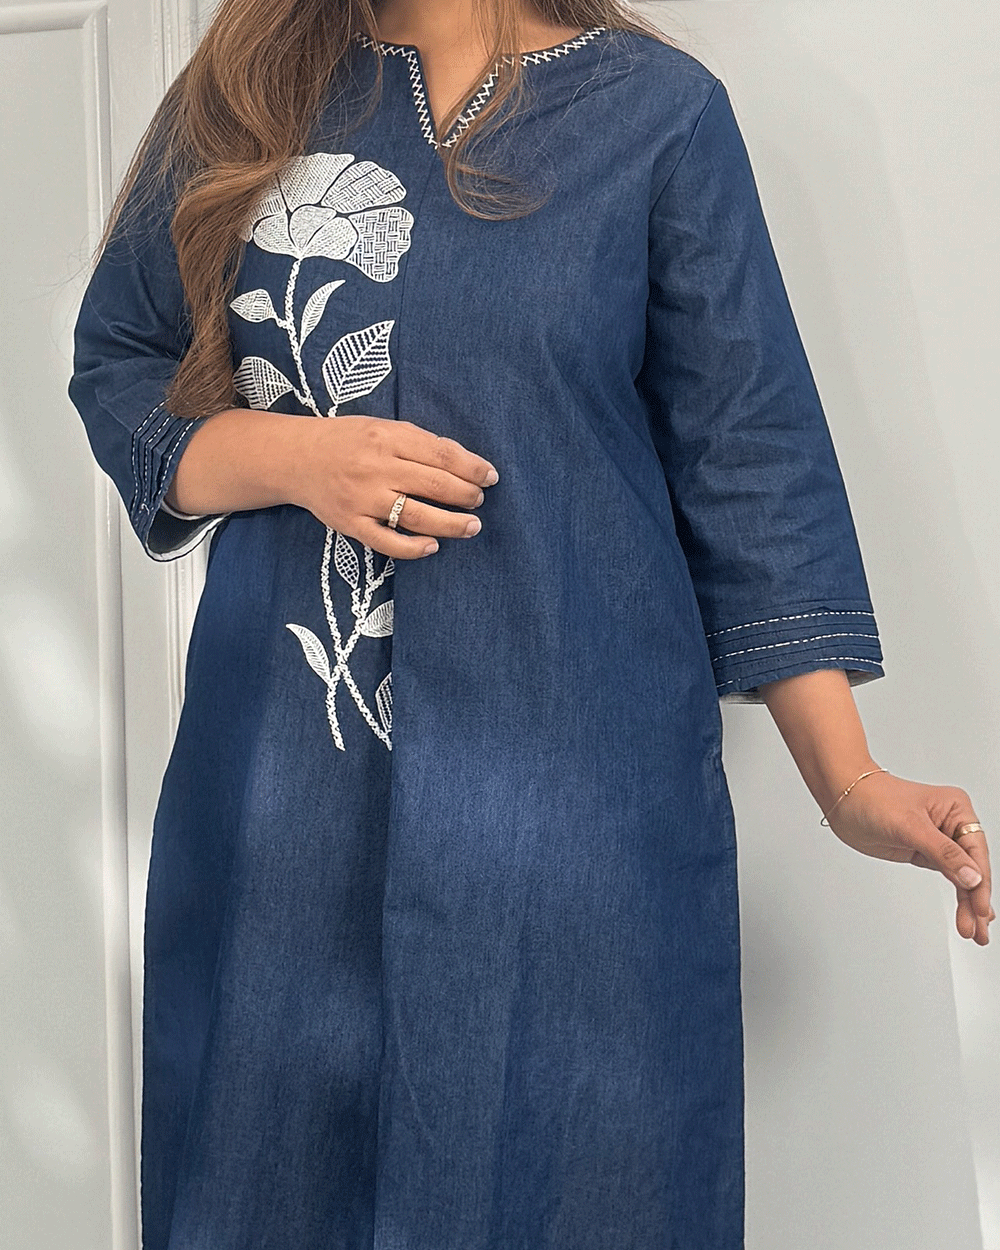 Buy denim kurtas for women latest design in India @ Limeroad